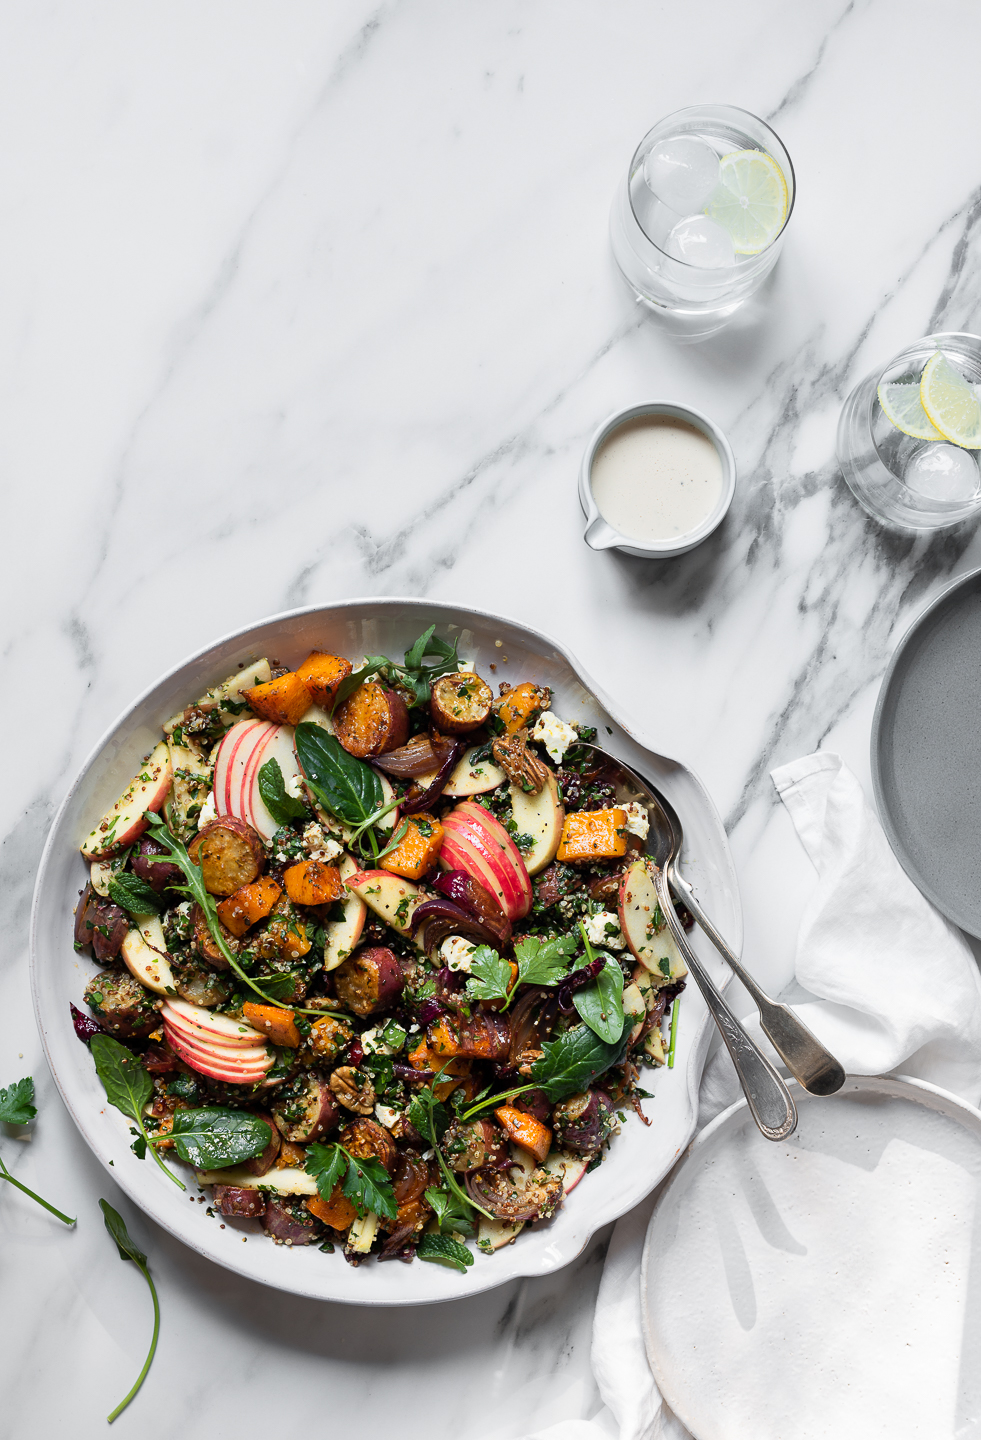 Roast veg and quinoa salad